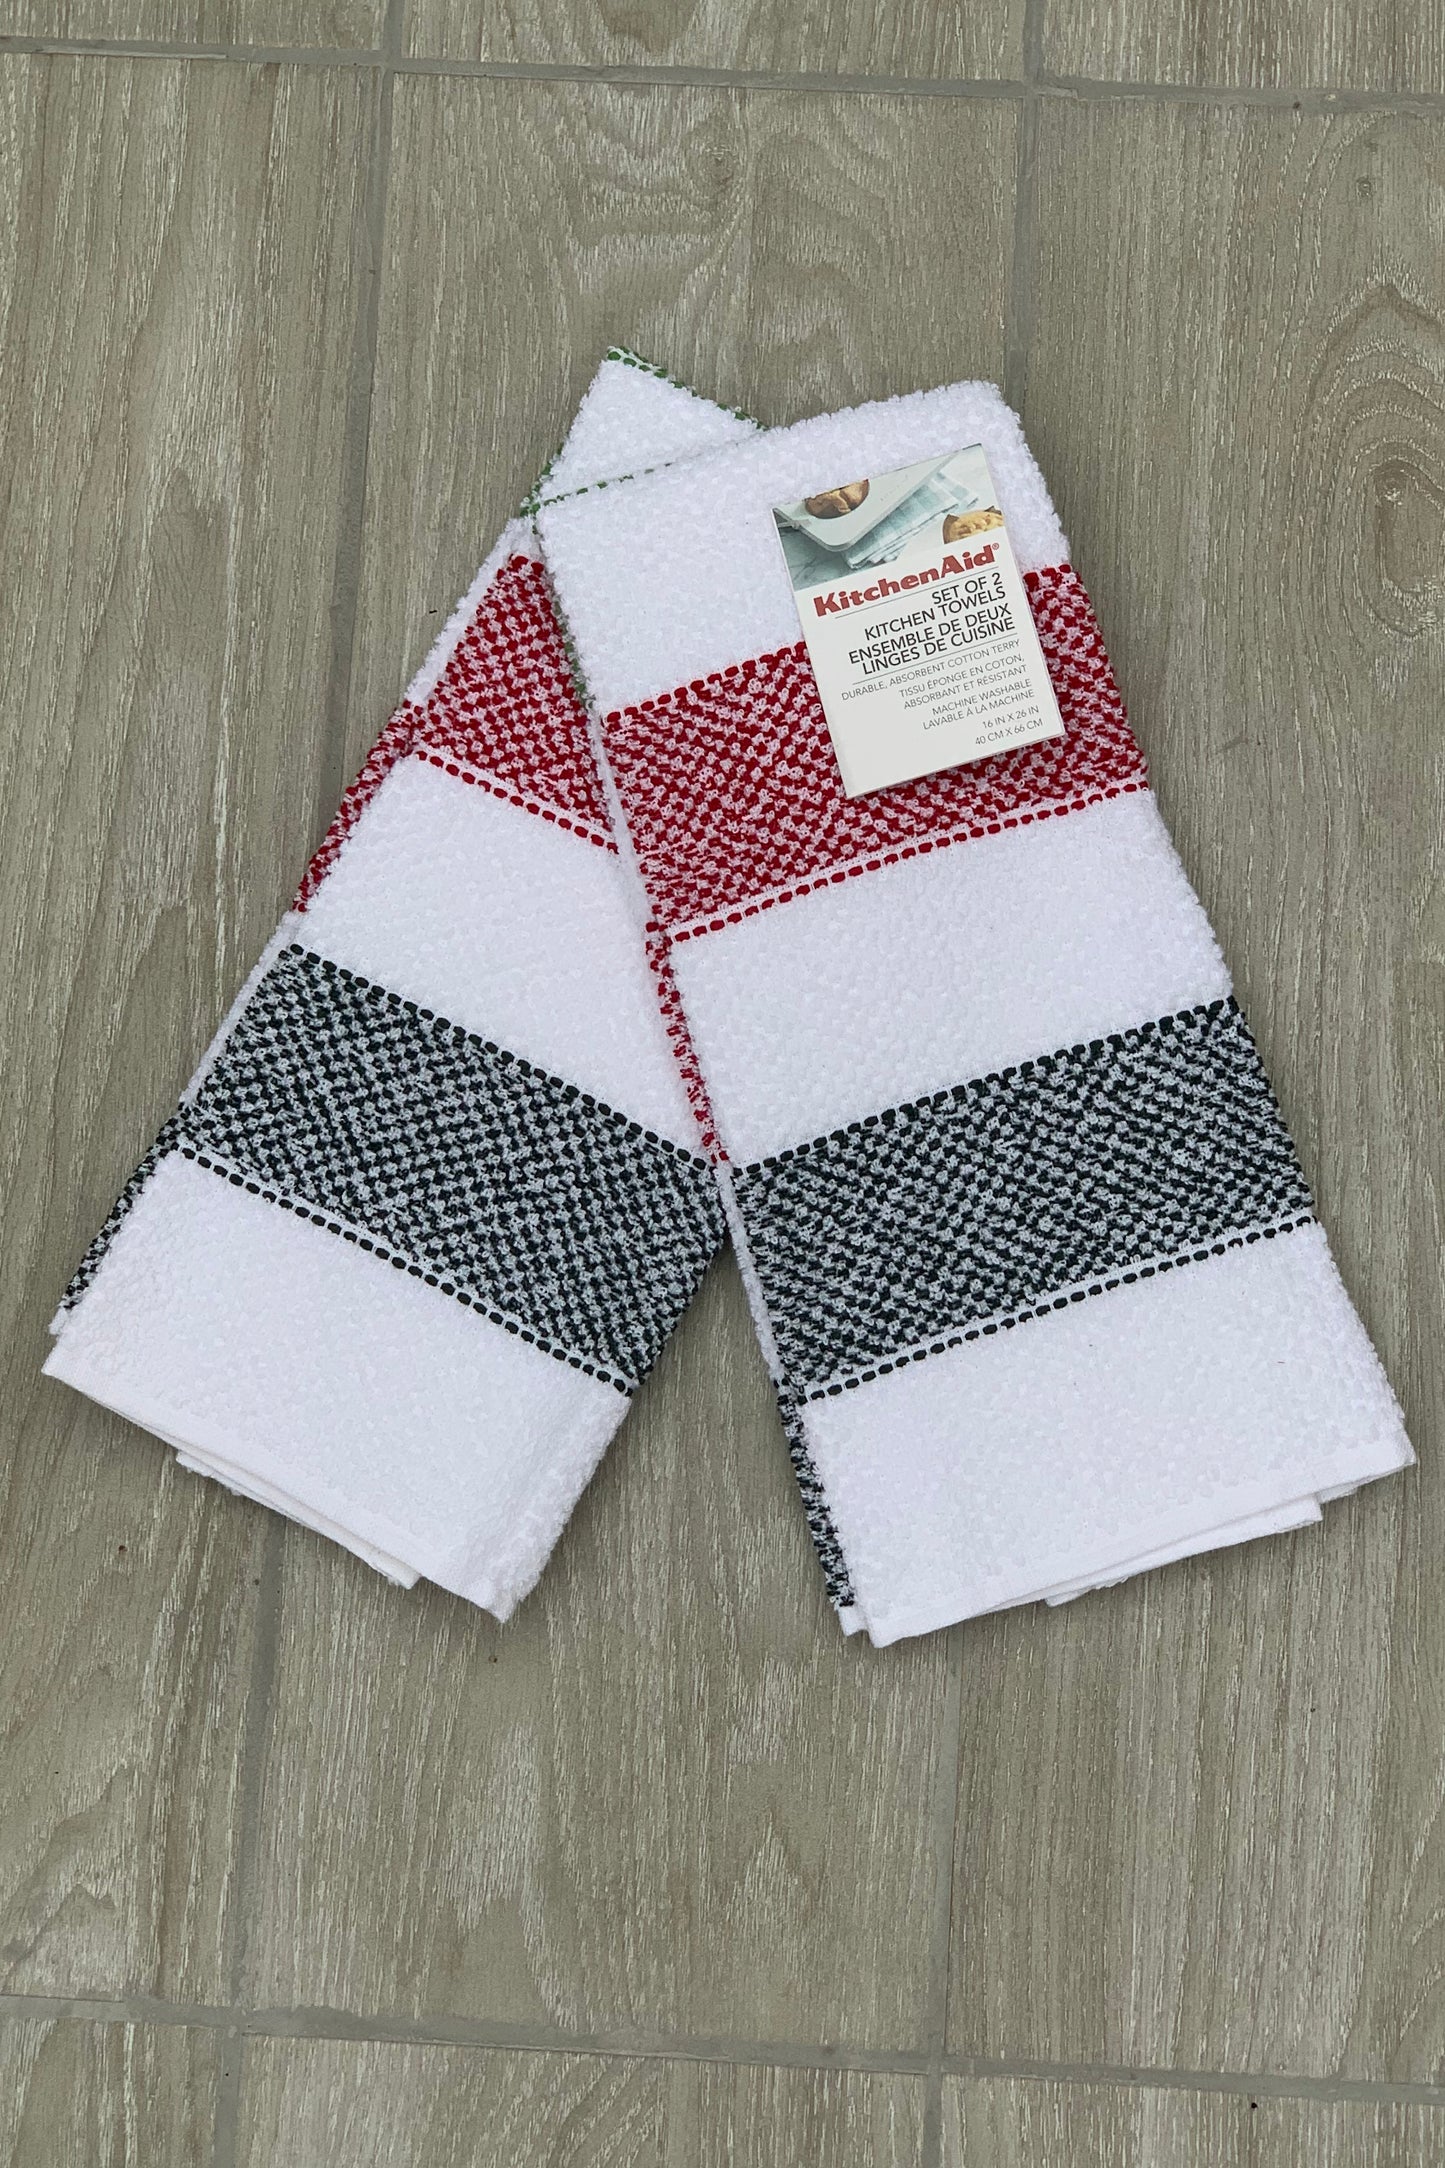 Grey, White, Green Striped Tea Towel Set, Set of 2 Tea towels